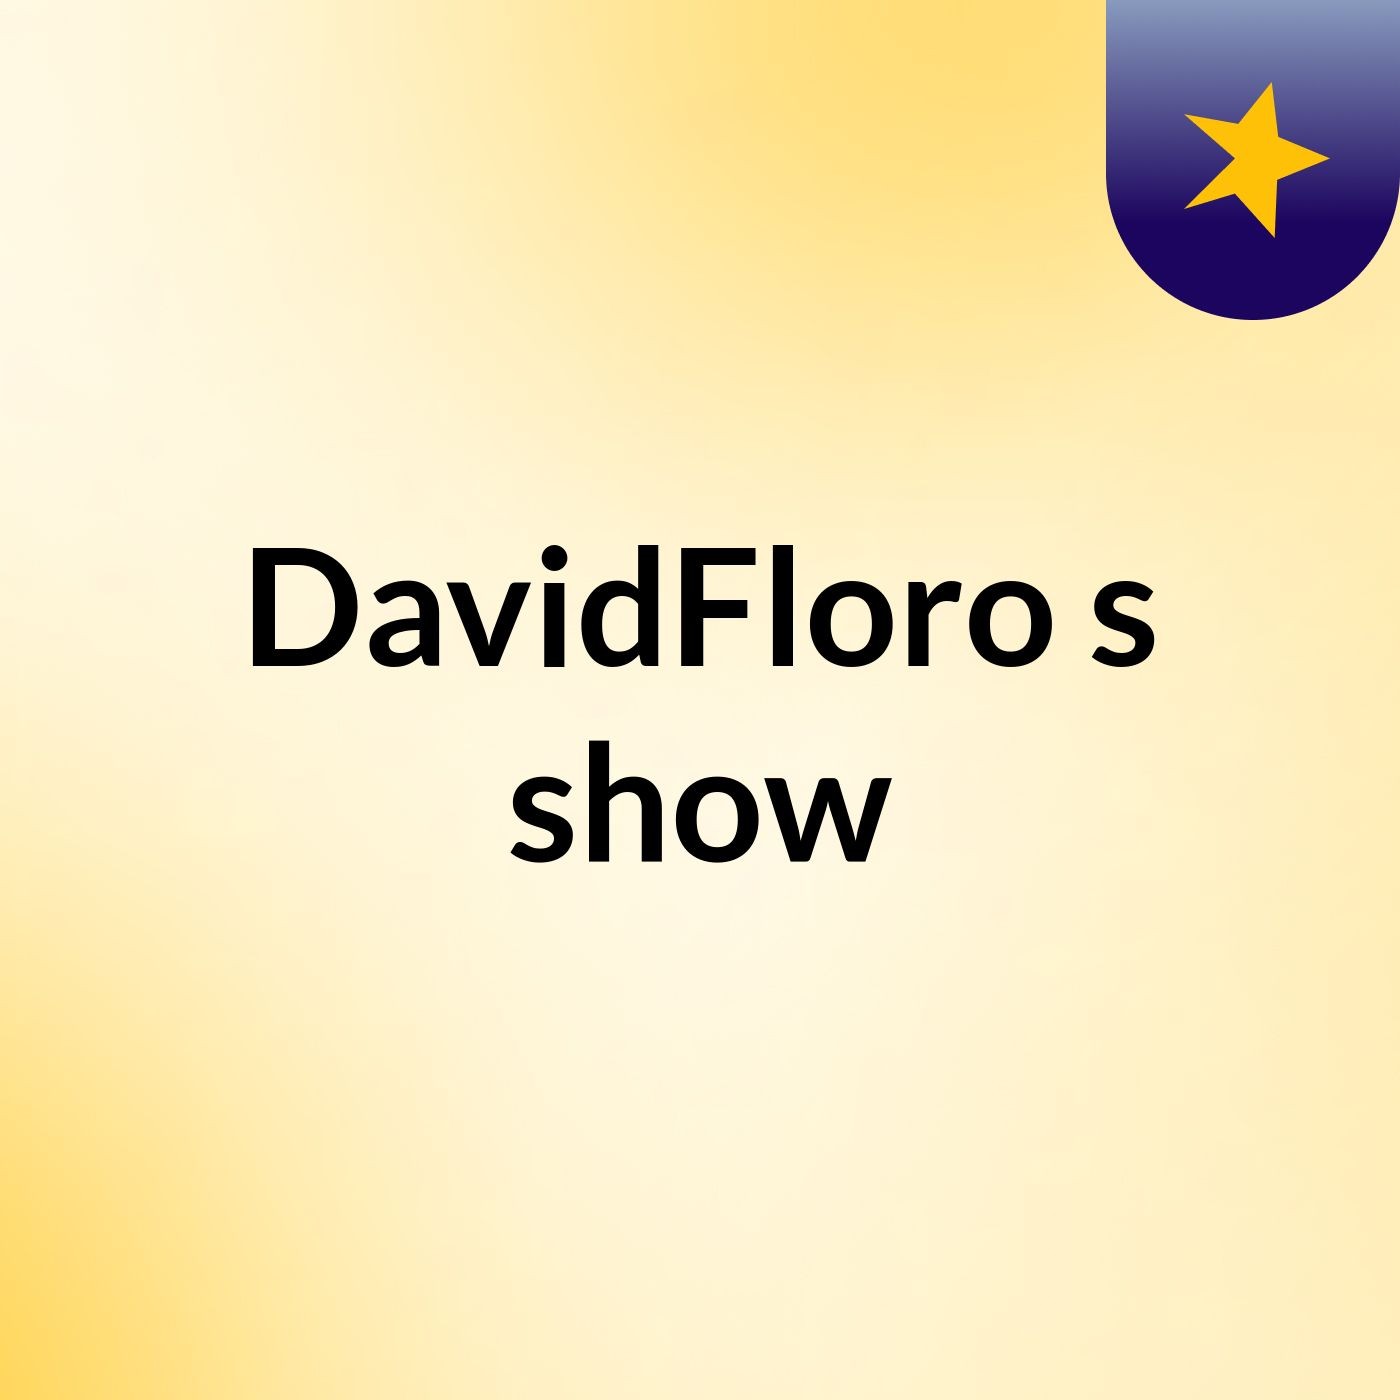 DavidFloro's show